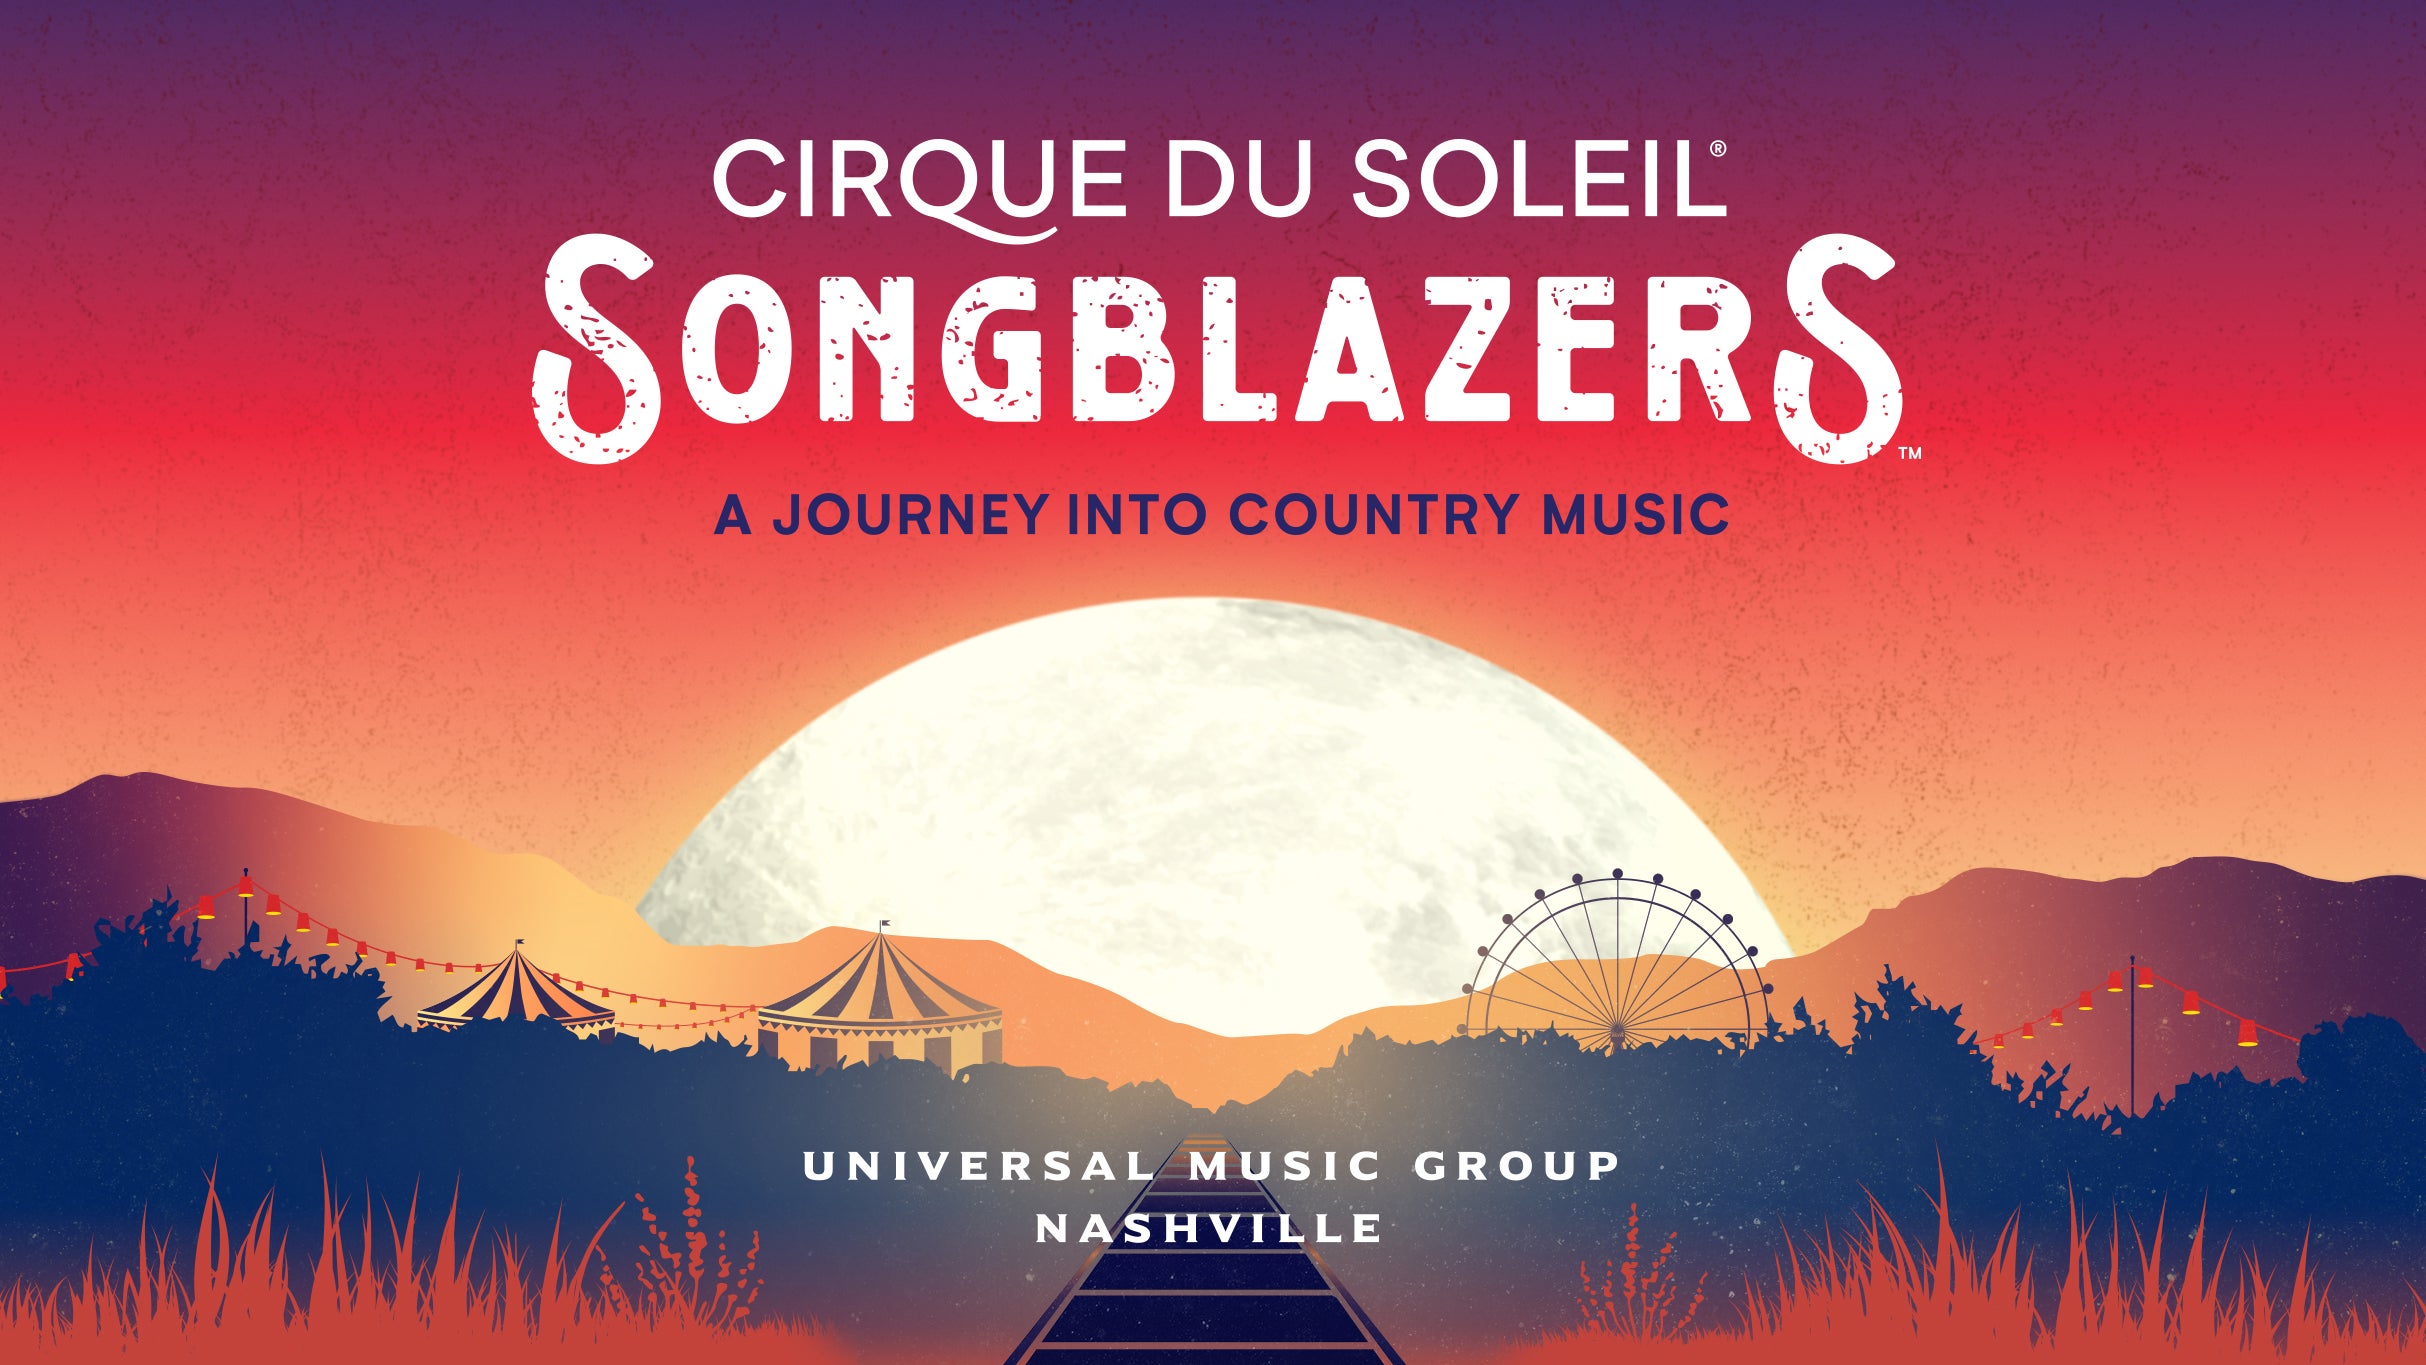 Cirque du Soleil: Songblazers in Dallas promo photo for Subscriber & e-Club presale offer code